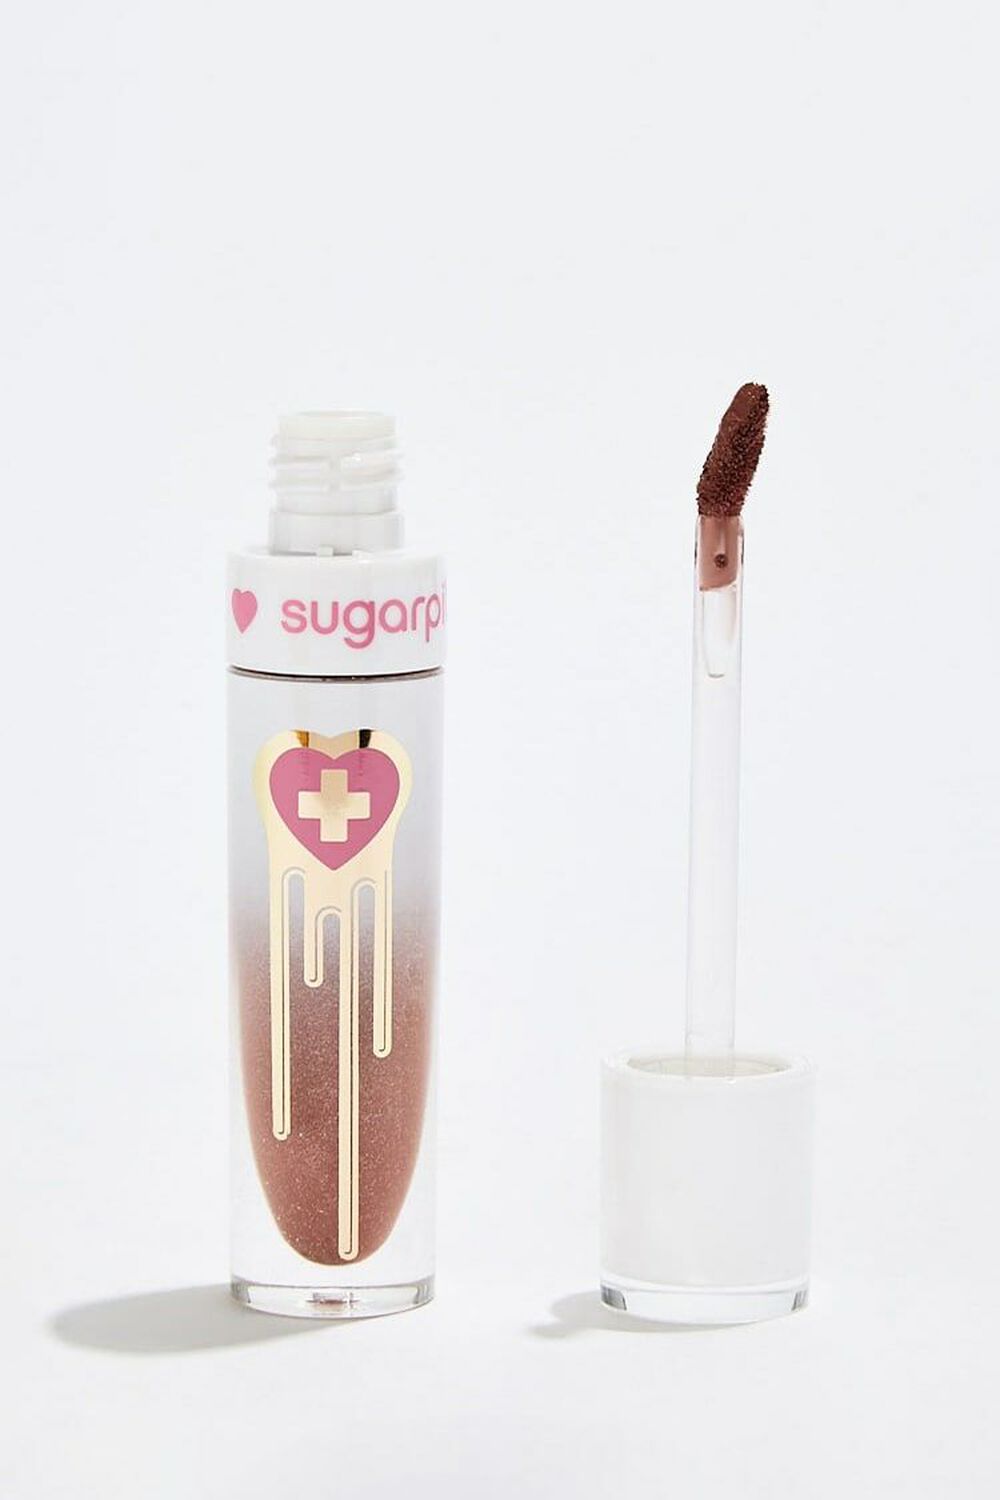 NEXT Sugarpill Love Bites Liquid Lip Color, image 1